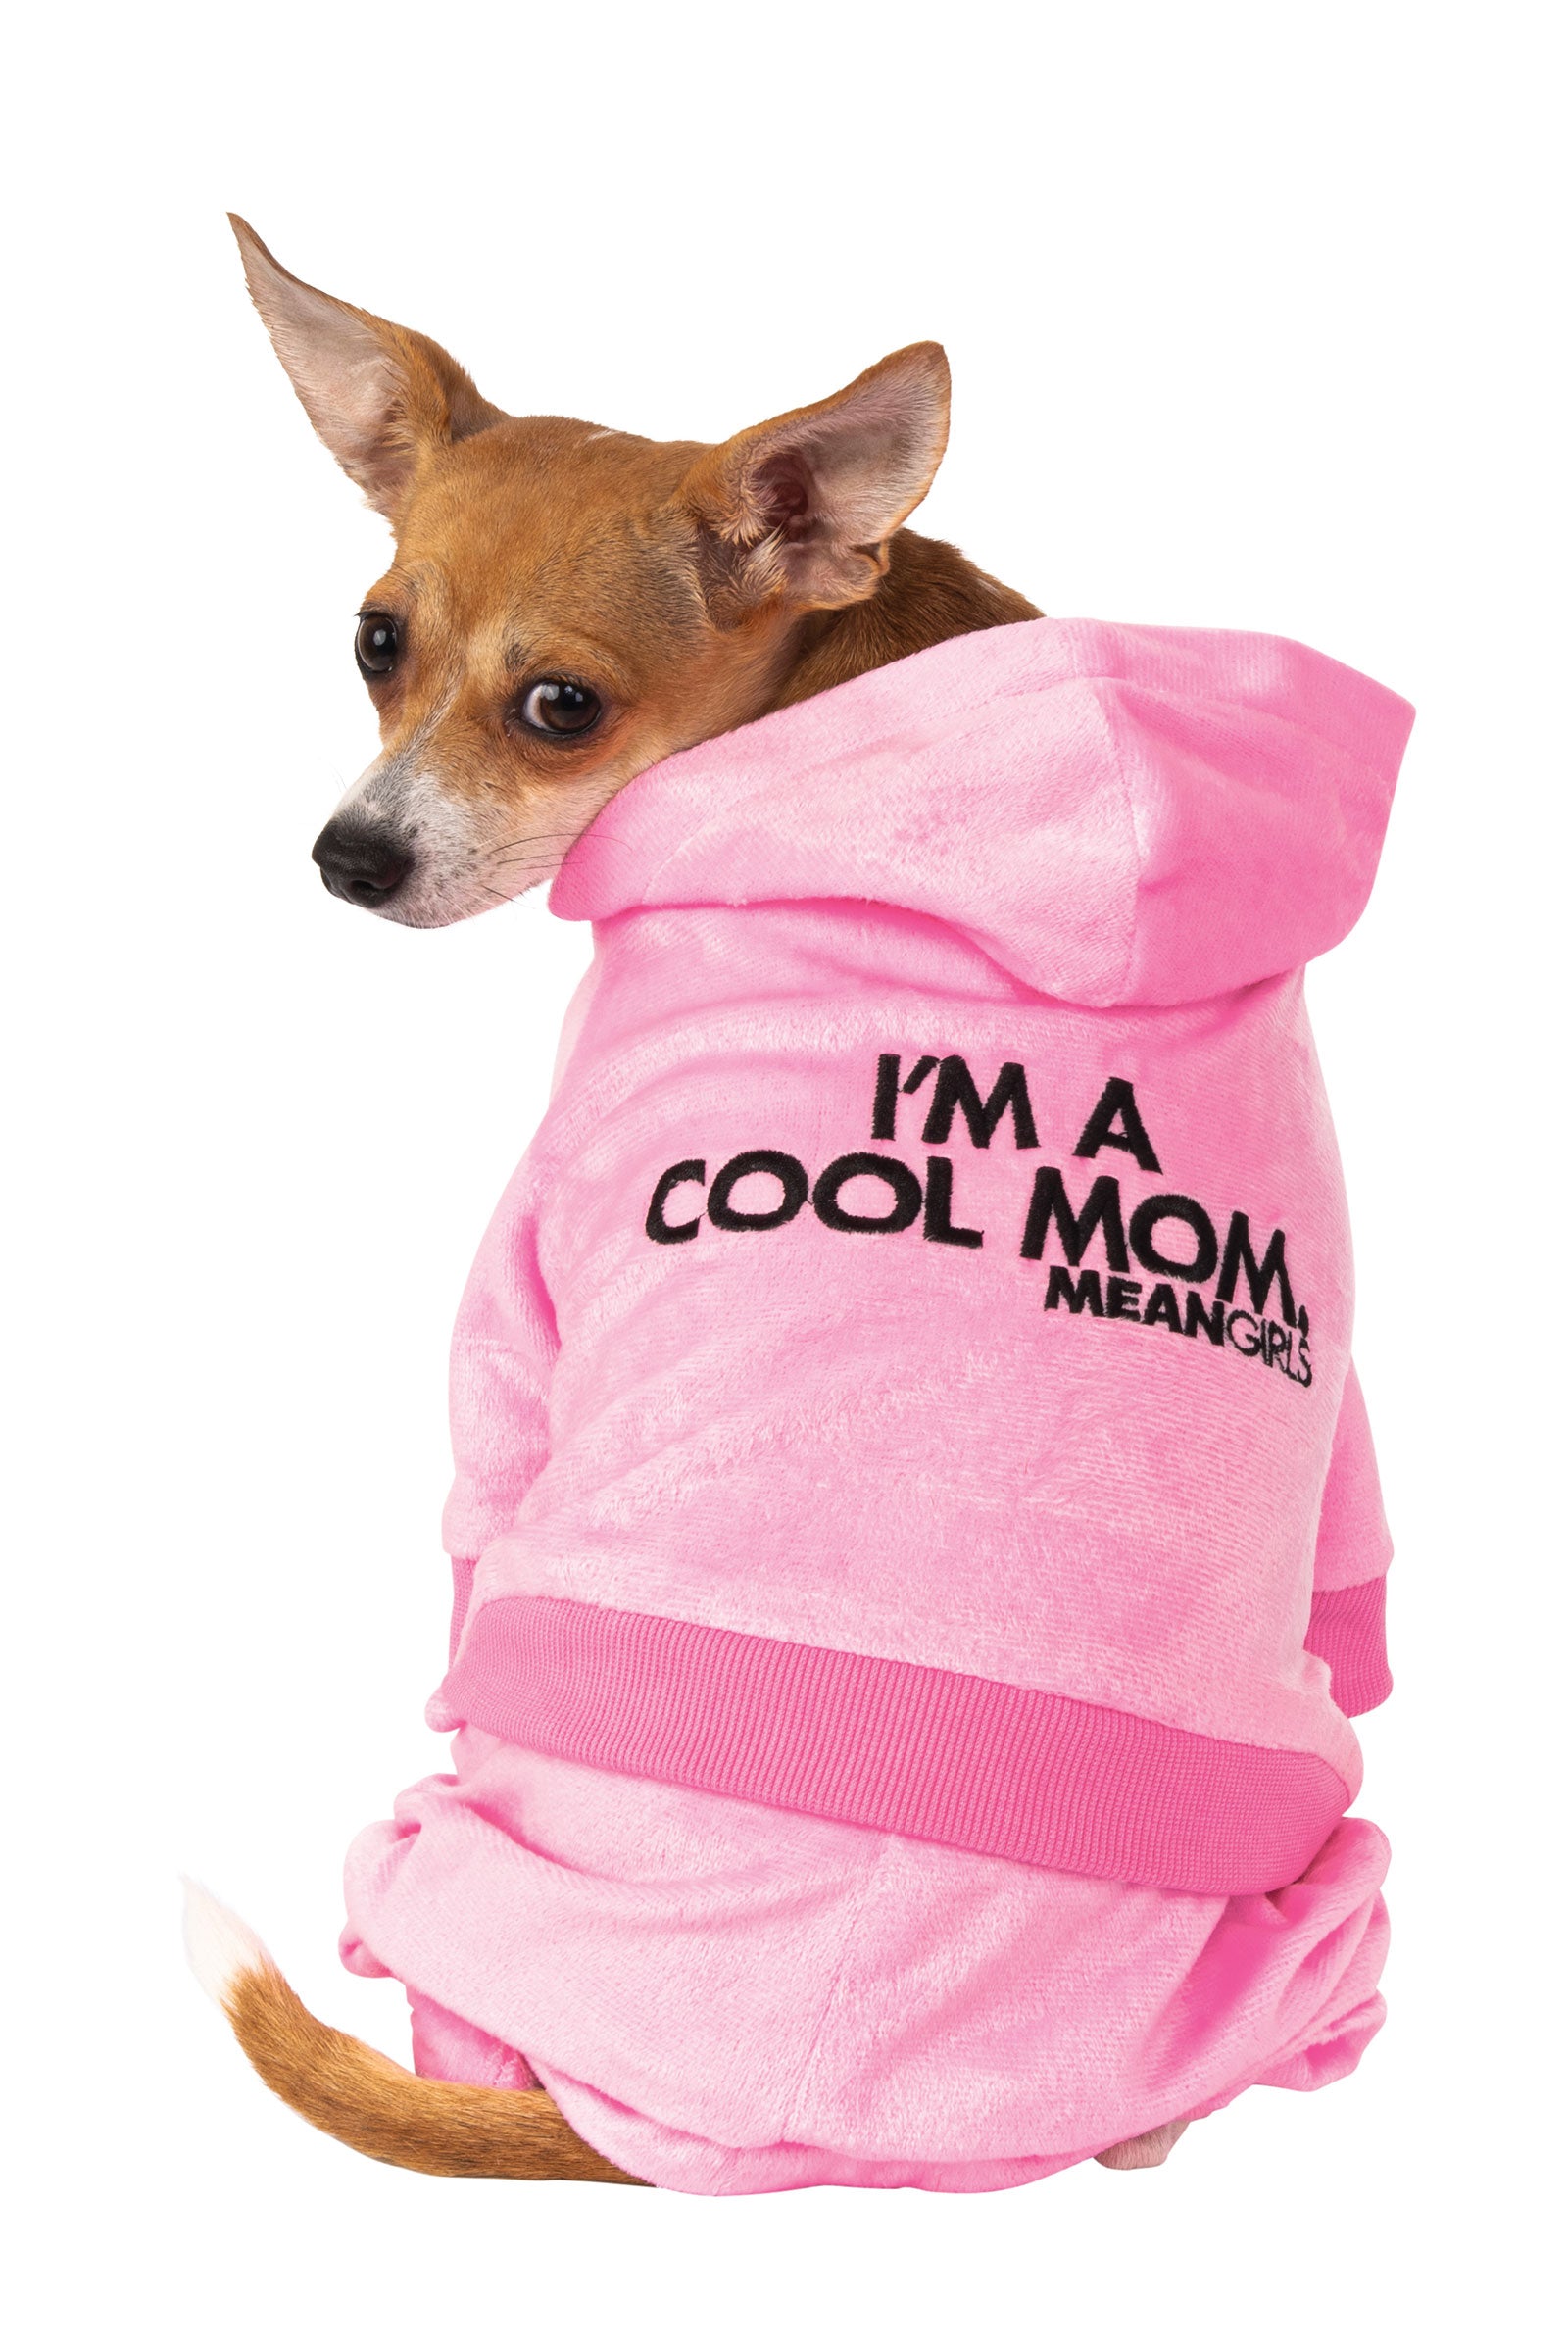 Cool Mom Track Suit Pet Costume